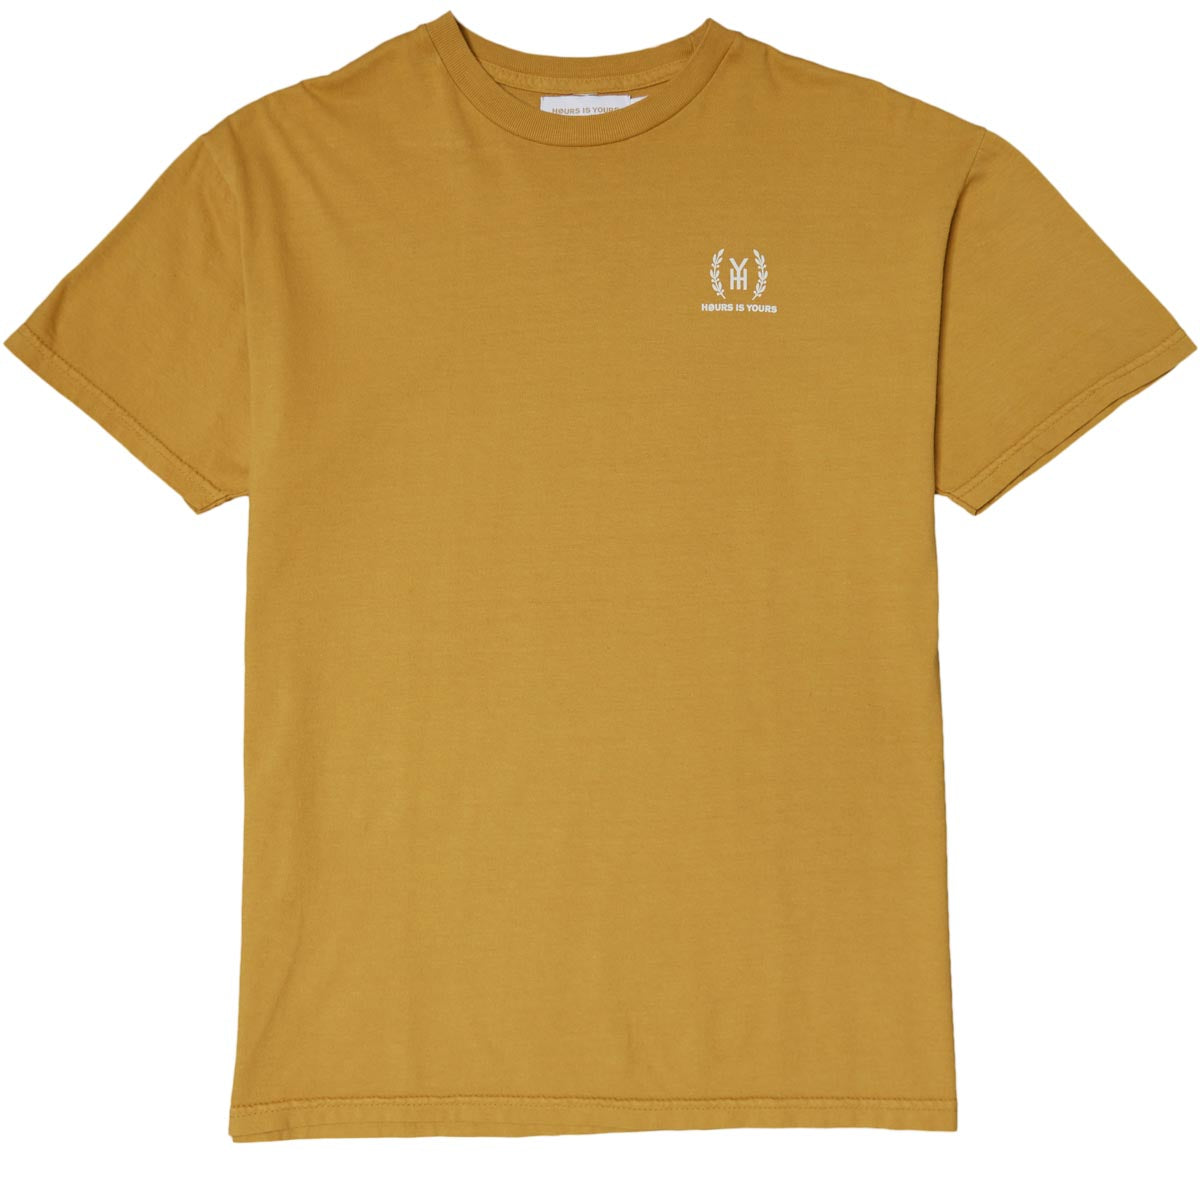 Vinatge Gold Hours Is Yours Monogram T-Shirt